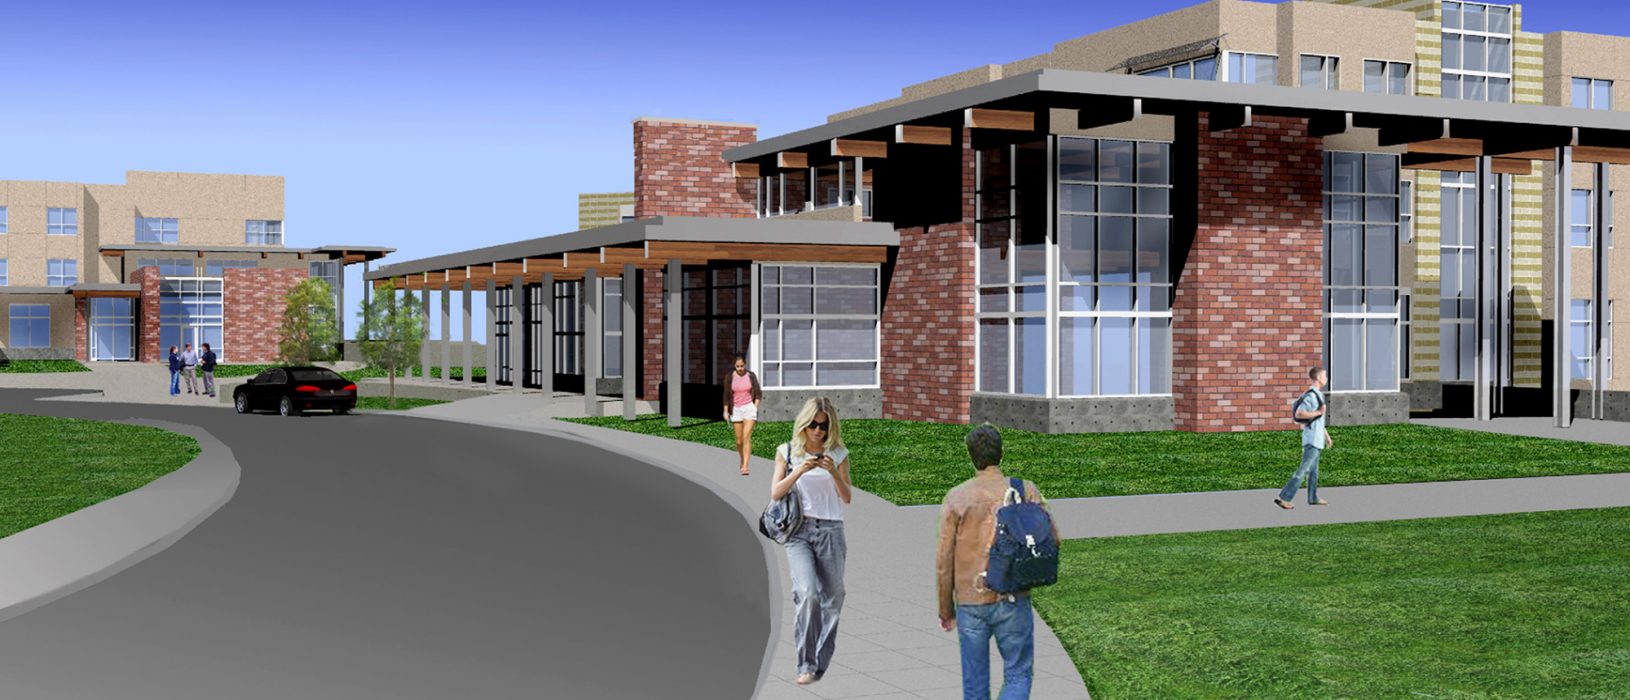 CSU Pueblo – Student Housing Village Expansion